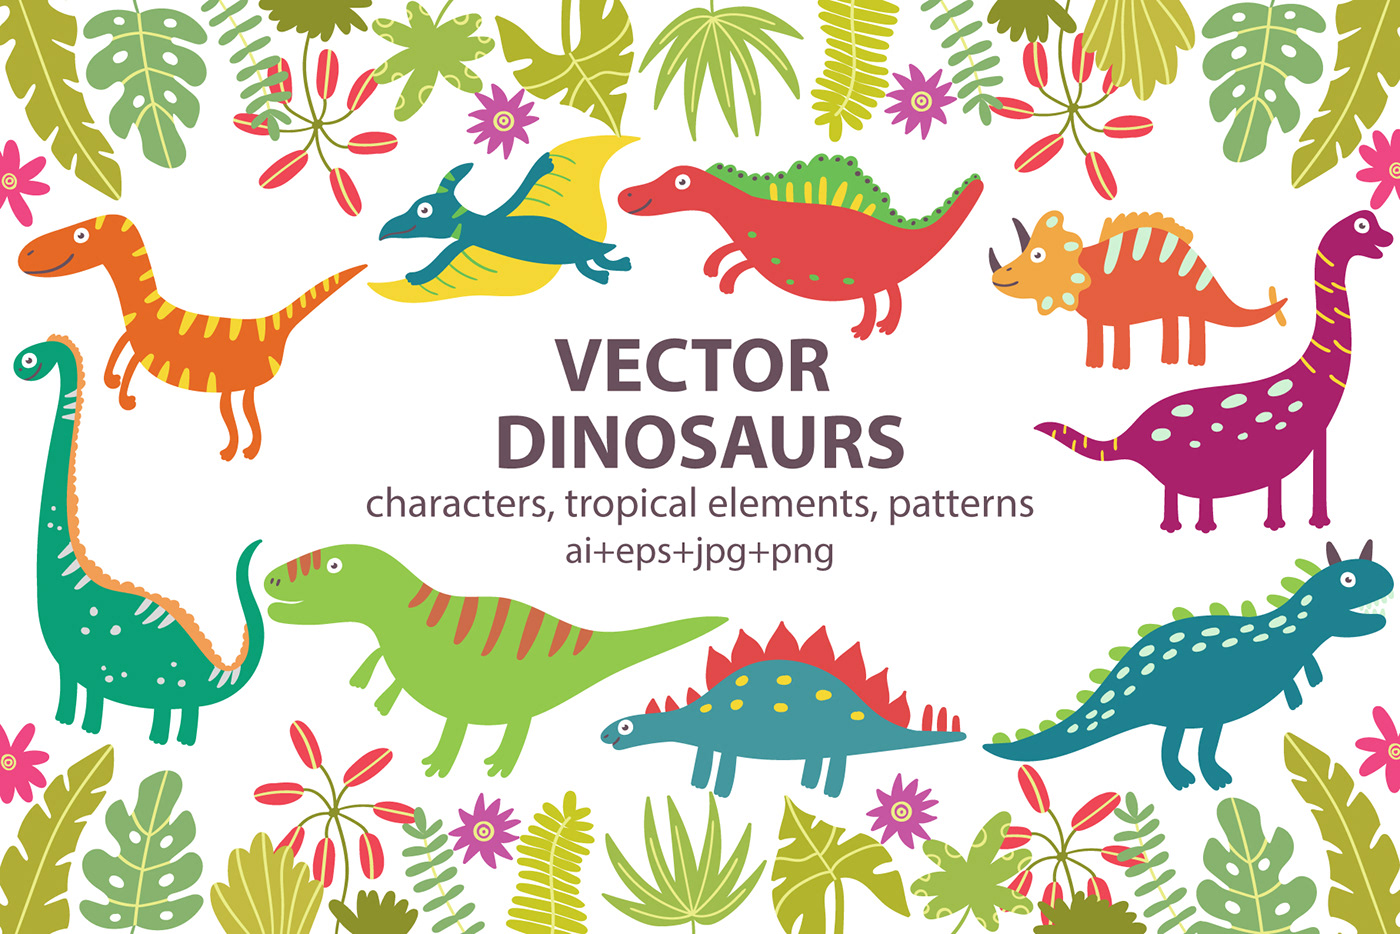 Vector Dinosaurs on Behance